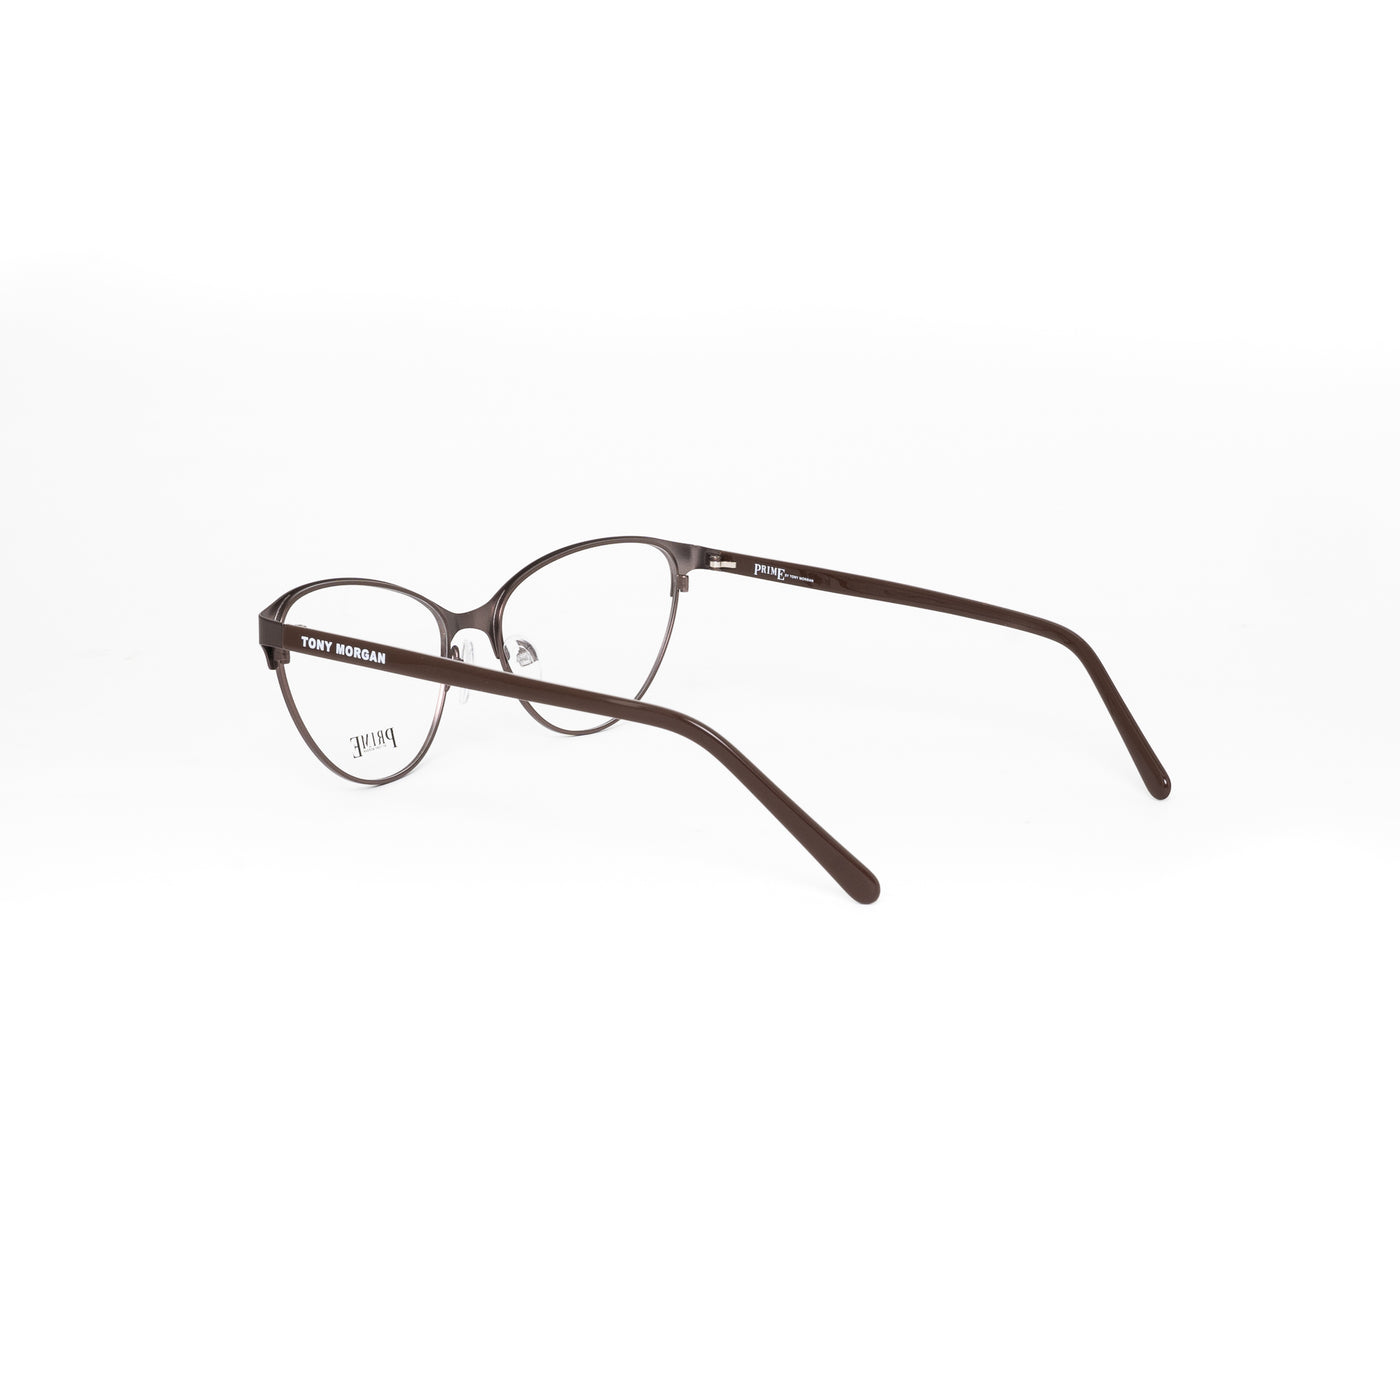 Tony Morgan London TM FF481088/C2| Eyeglasses - Vision Express Optical Philippines